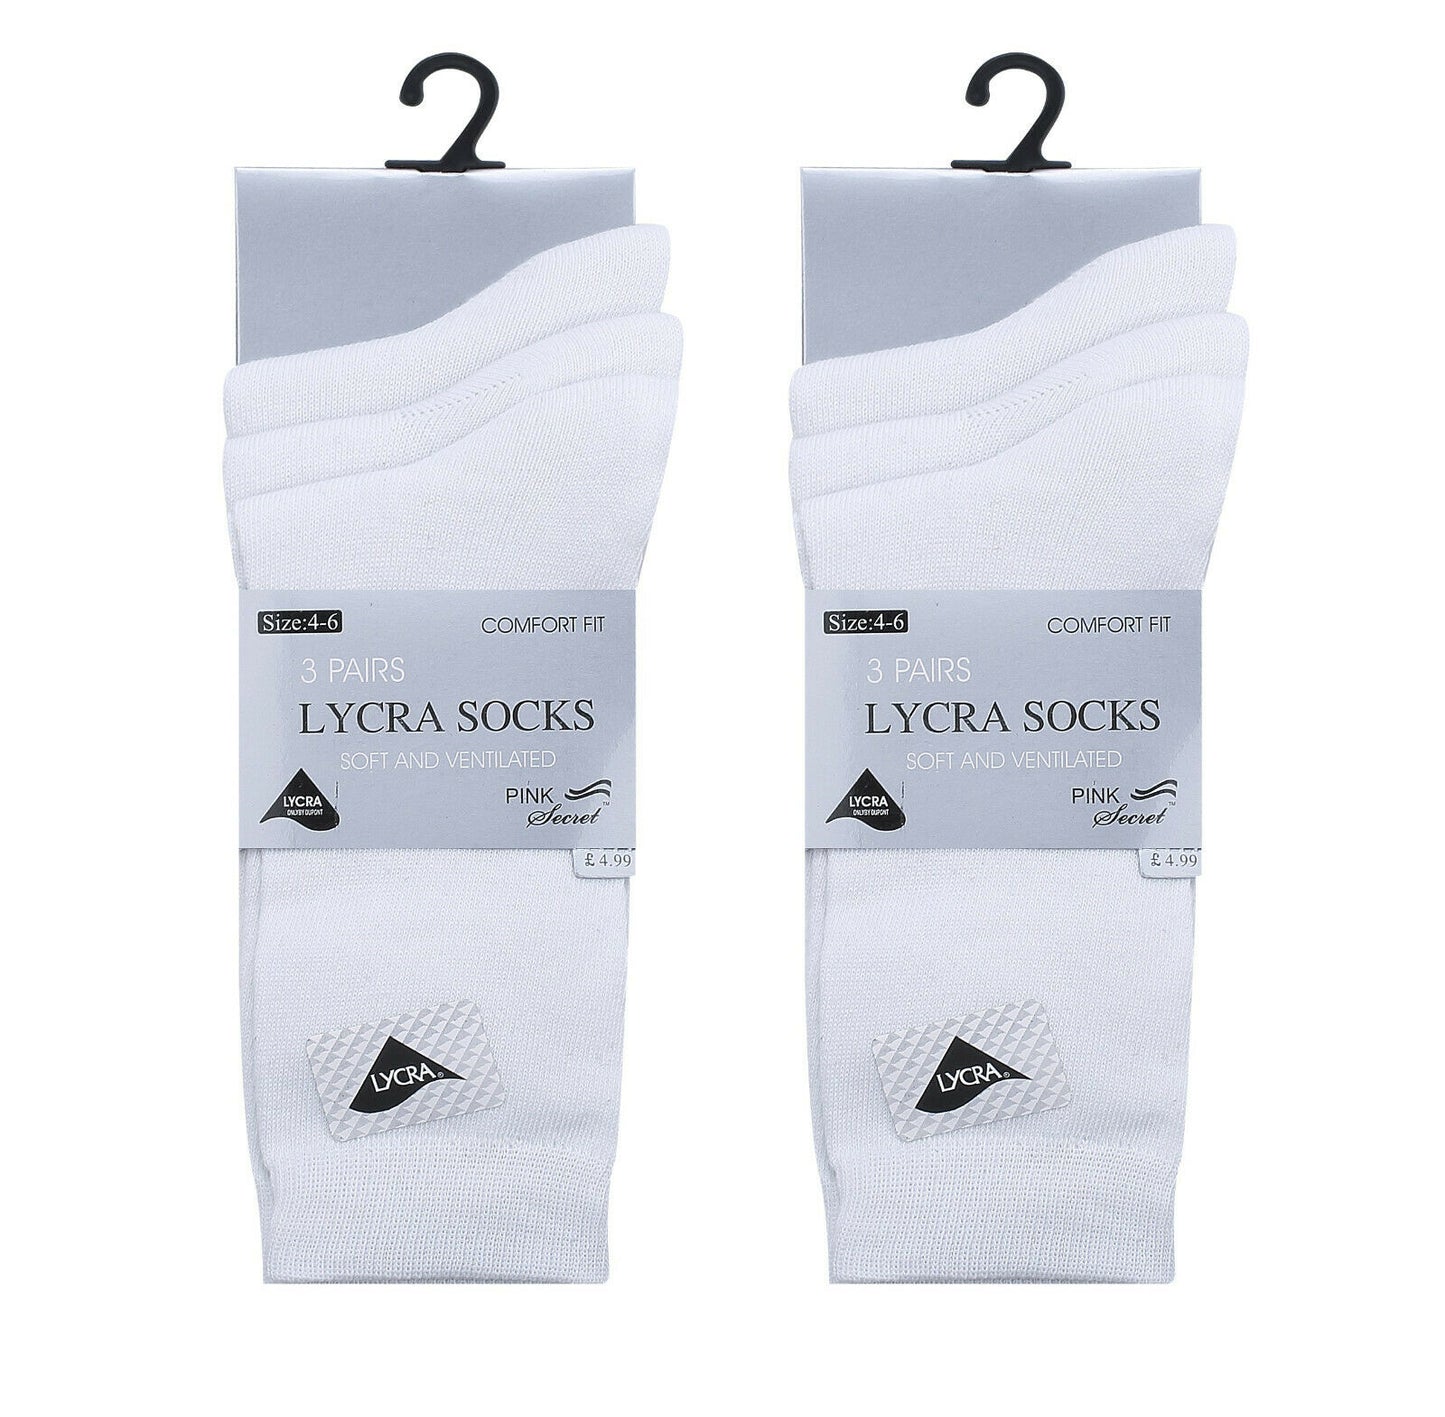 Ladies White Cotton Socks 6 Pairs.